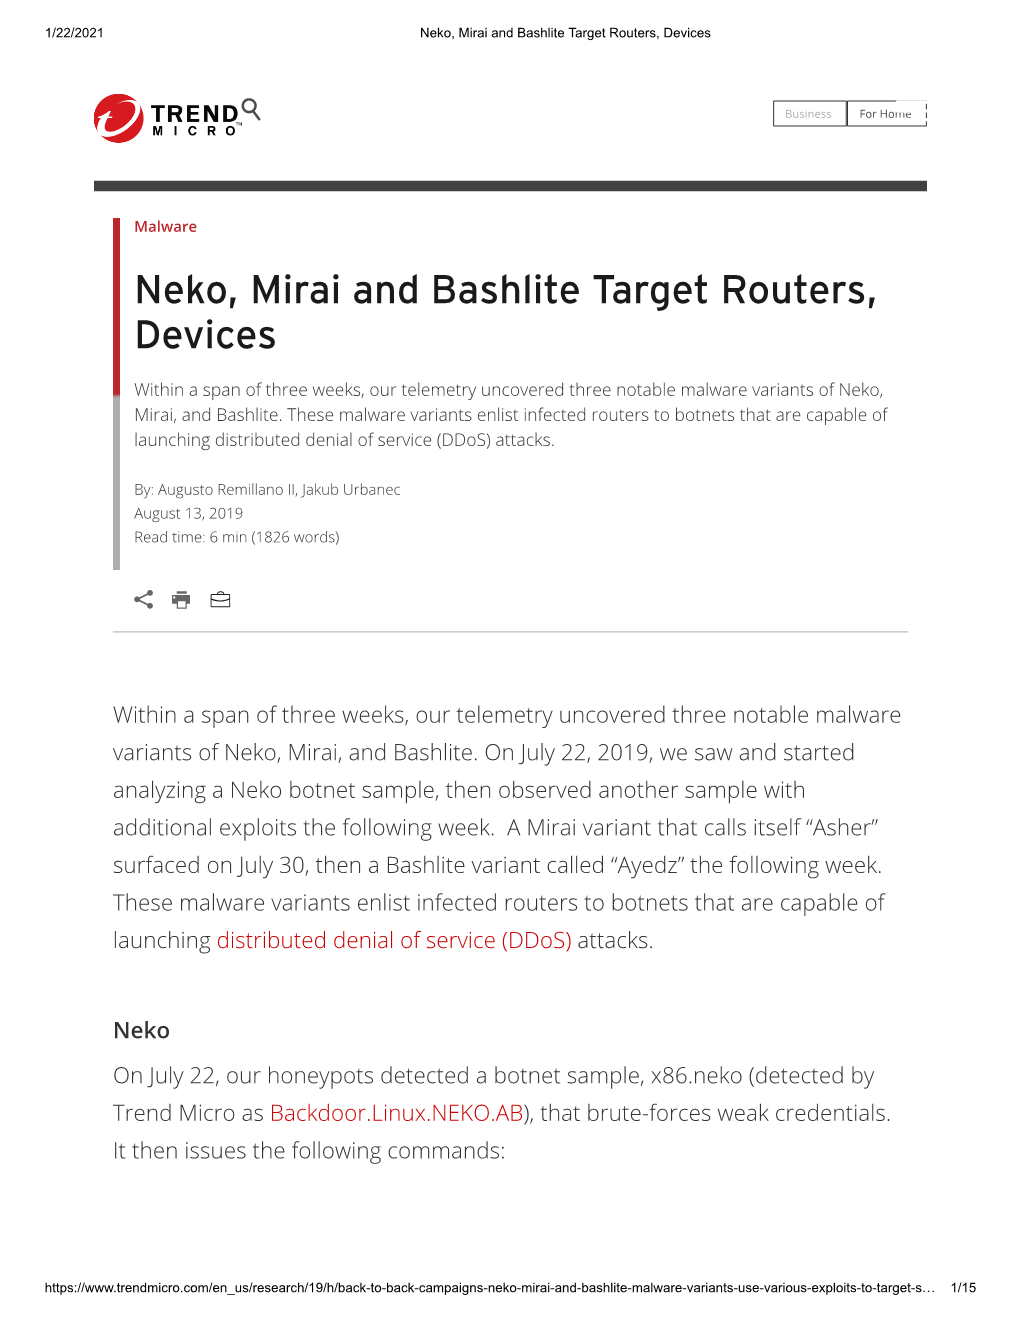 Neko, Mirai and Bashlite Target Routers, Devices